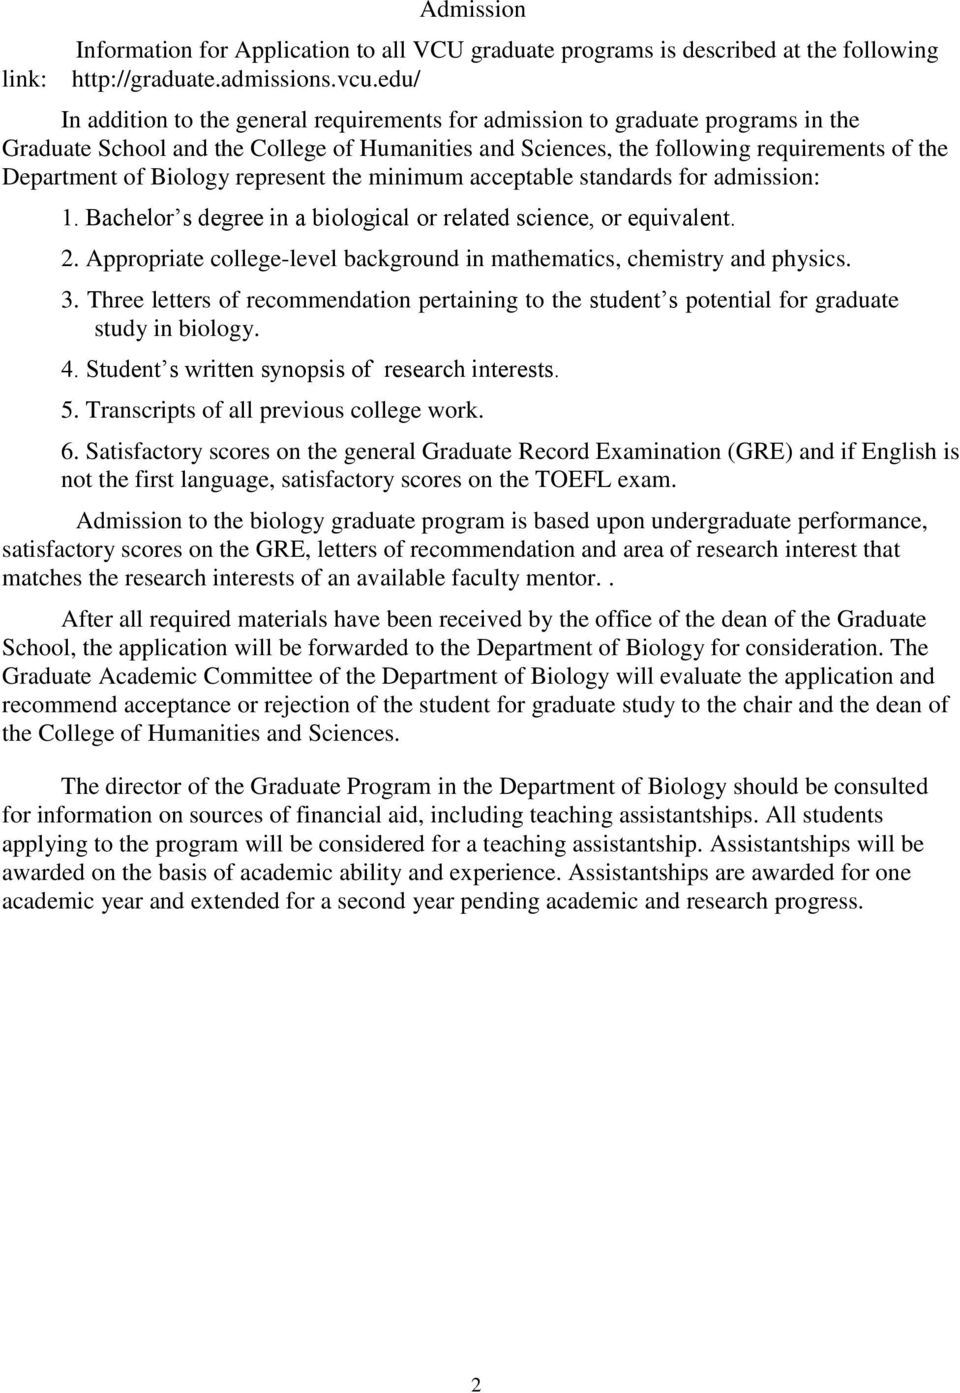 Recommendation Letter For Biology Graduate School Enom regarding proportions 960 X 1393